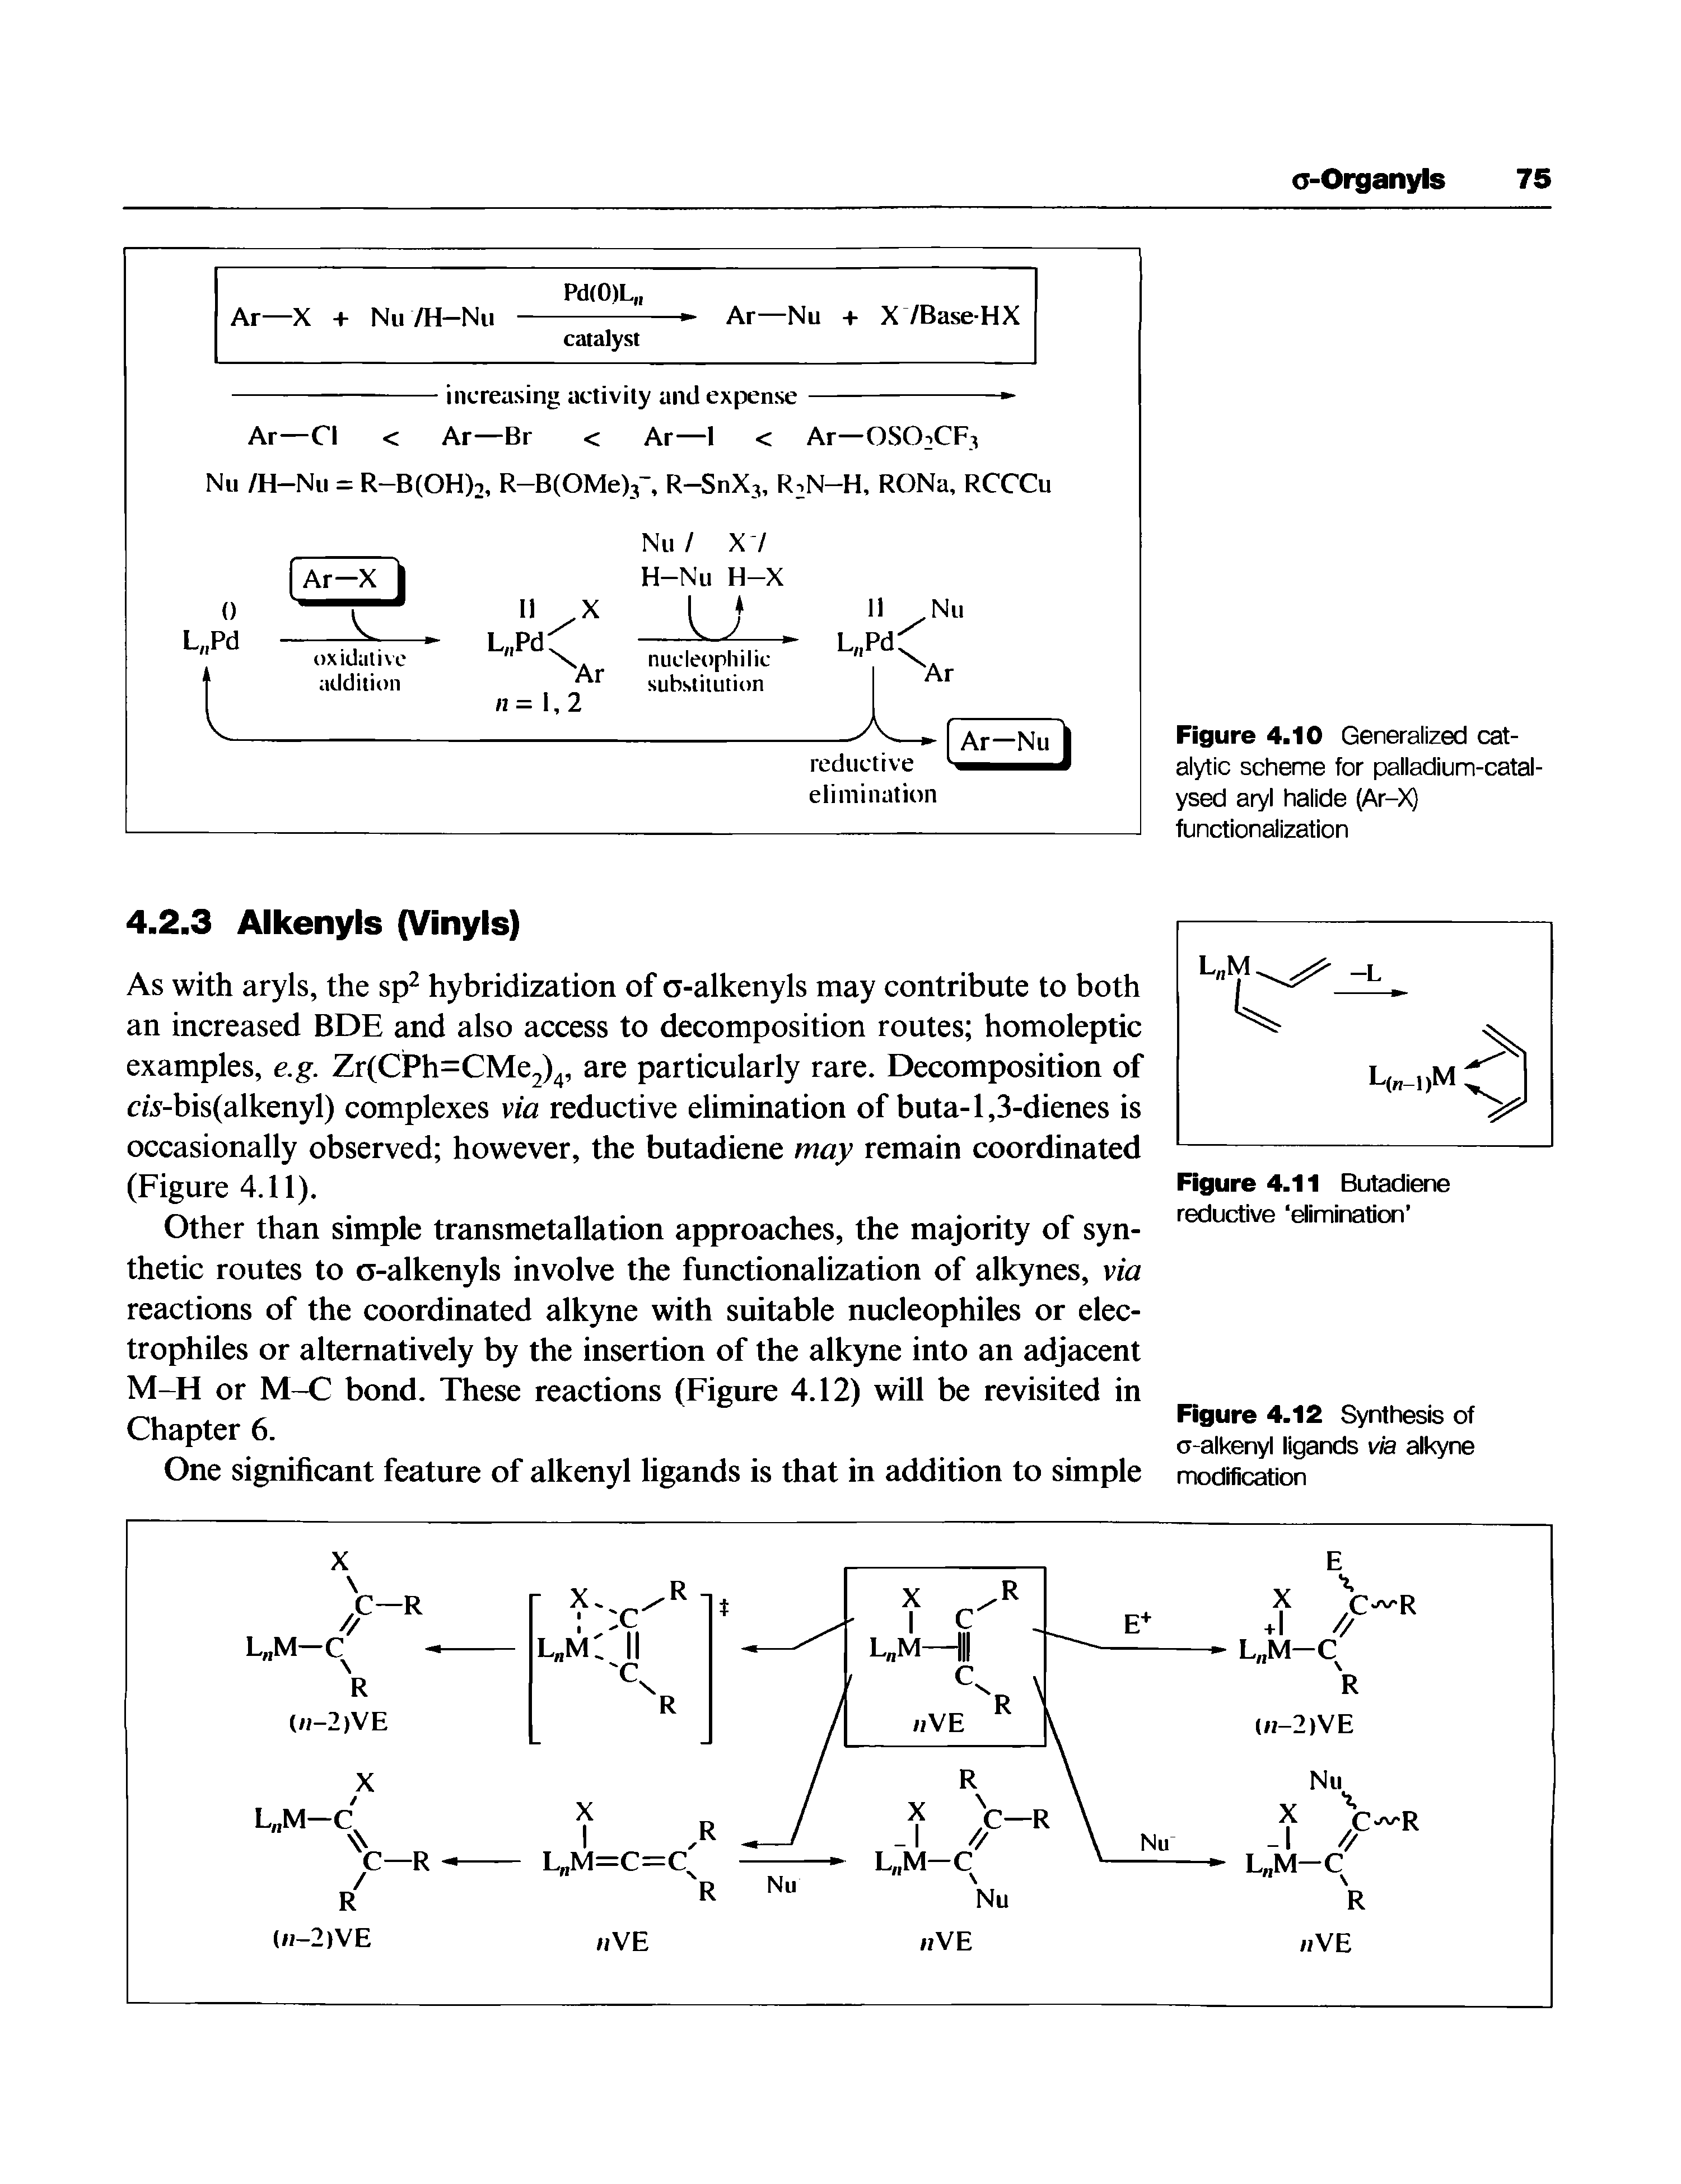 Figure 4.12 Synthesis of o-alkenyl ligands via alkyne modification...